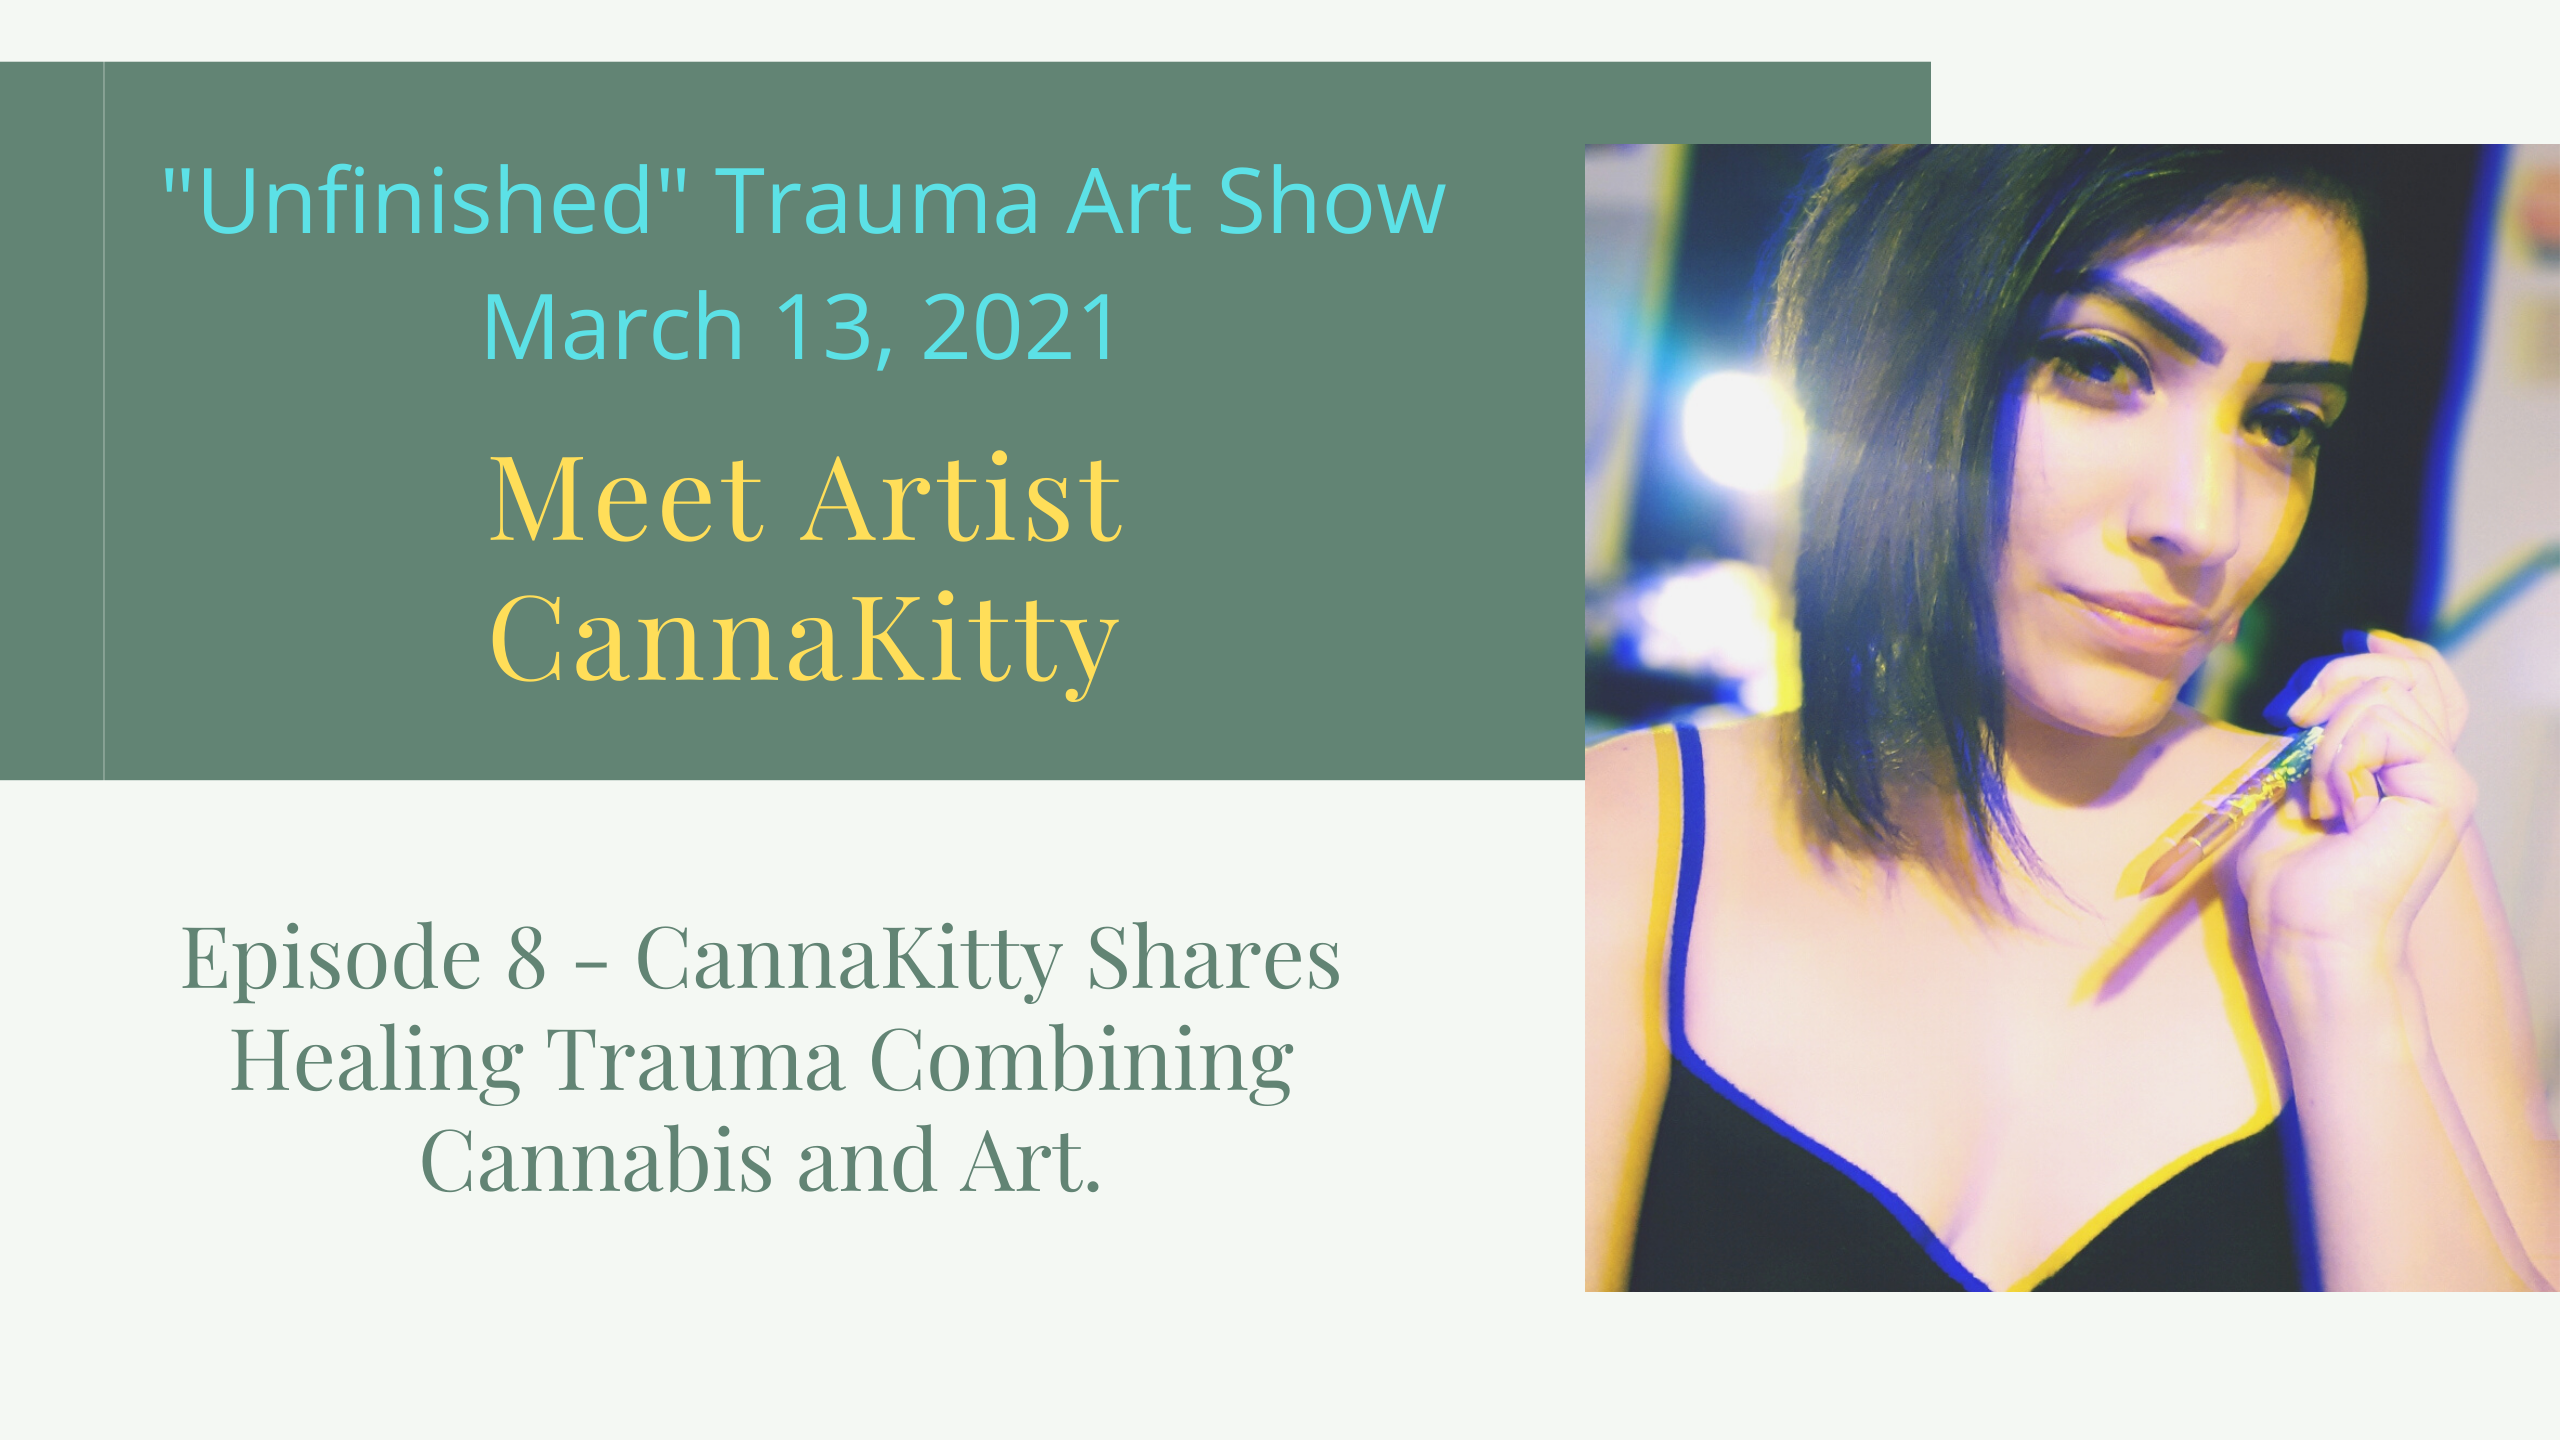 Healing Trauma Combining Cannabis and Art